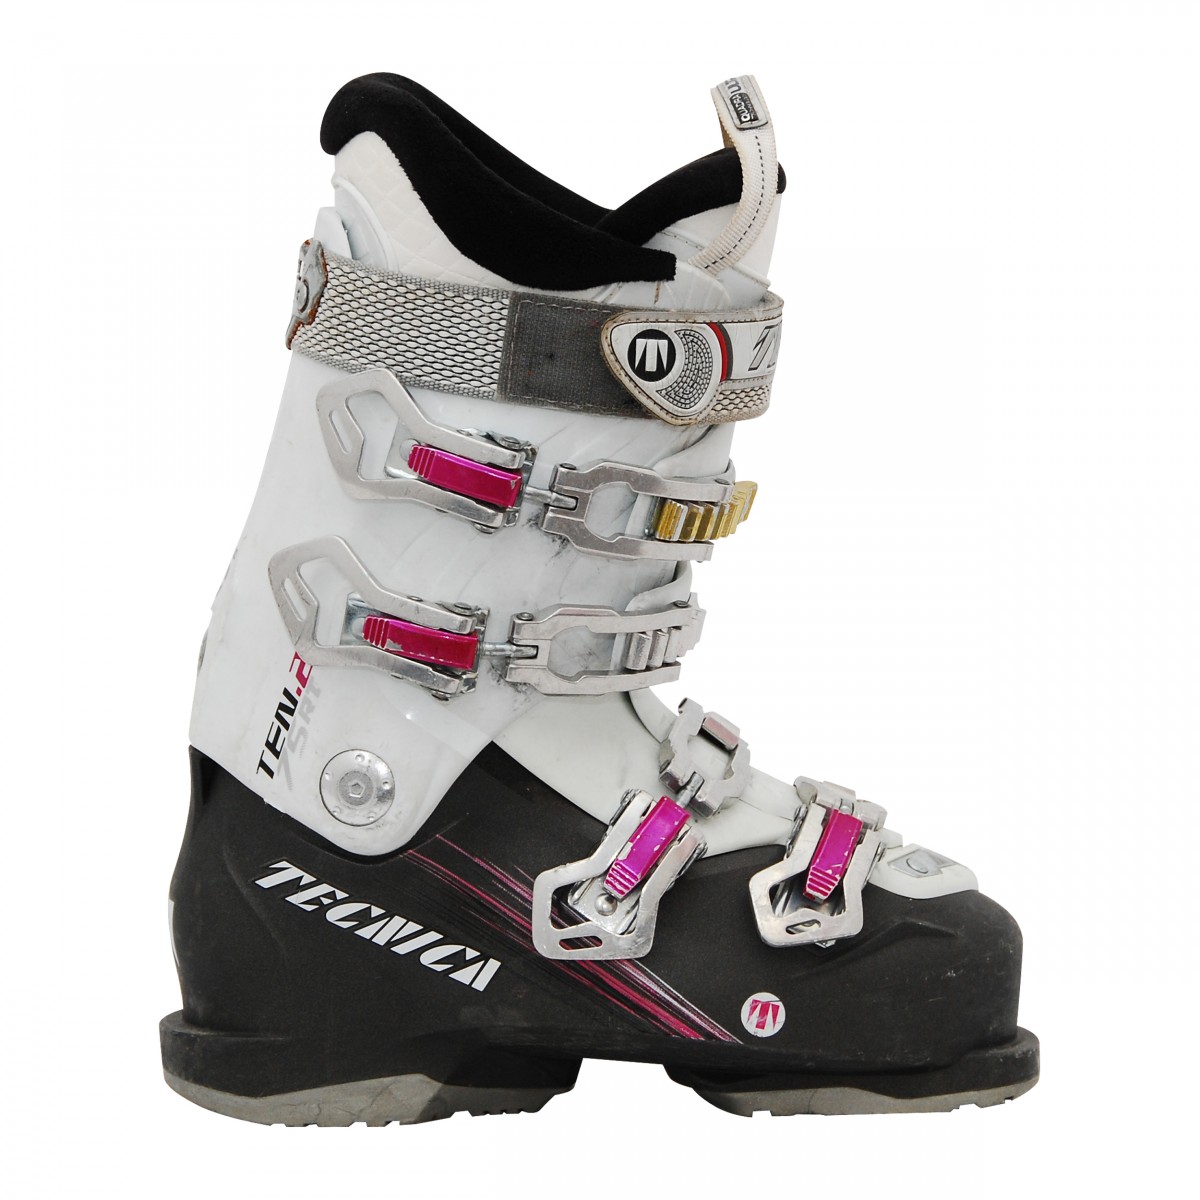 Chaussures ski occasion femme Tecnica ten 2 noir/blanc